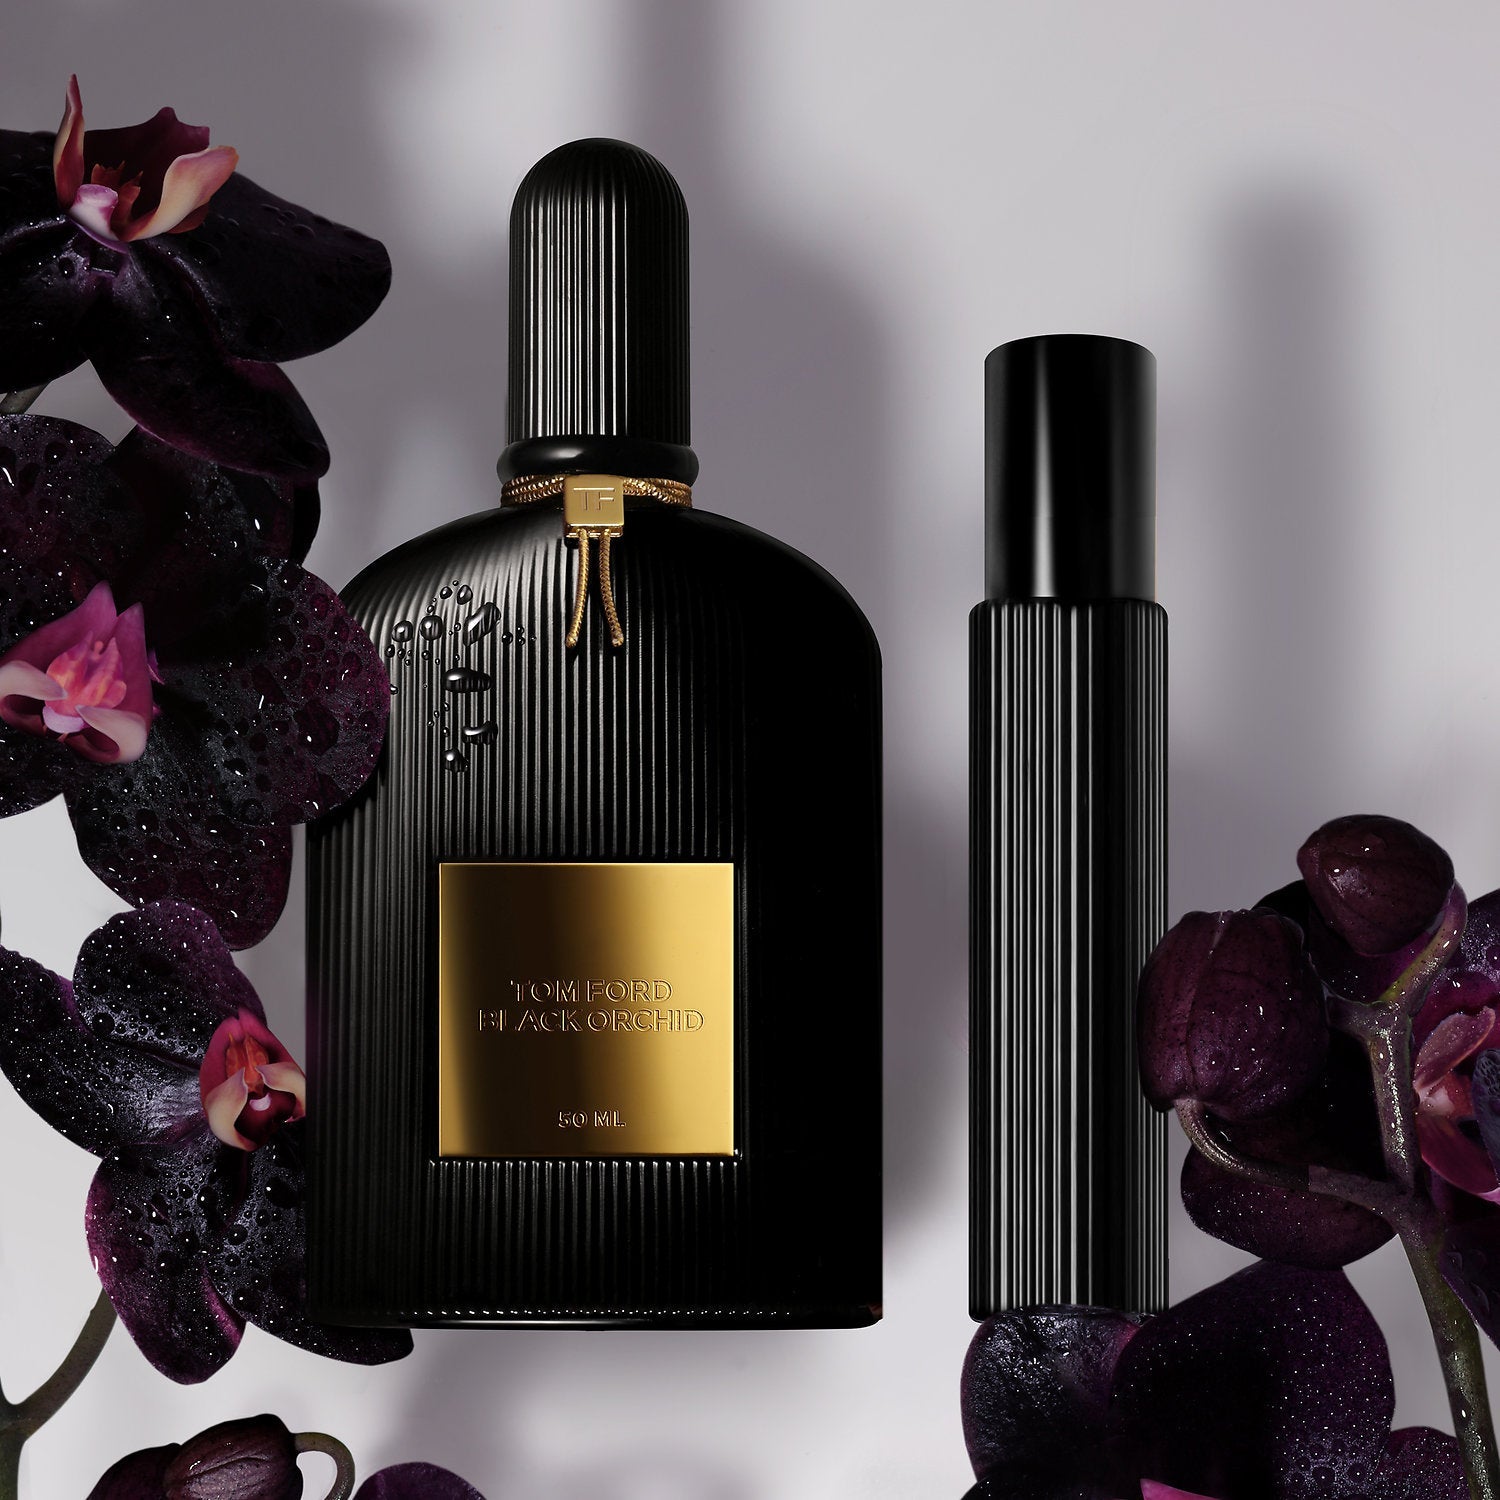 TOM FORD Black Orchid All Over Body Spray | My Perfume Shop Australia